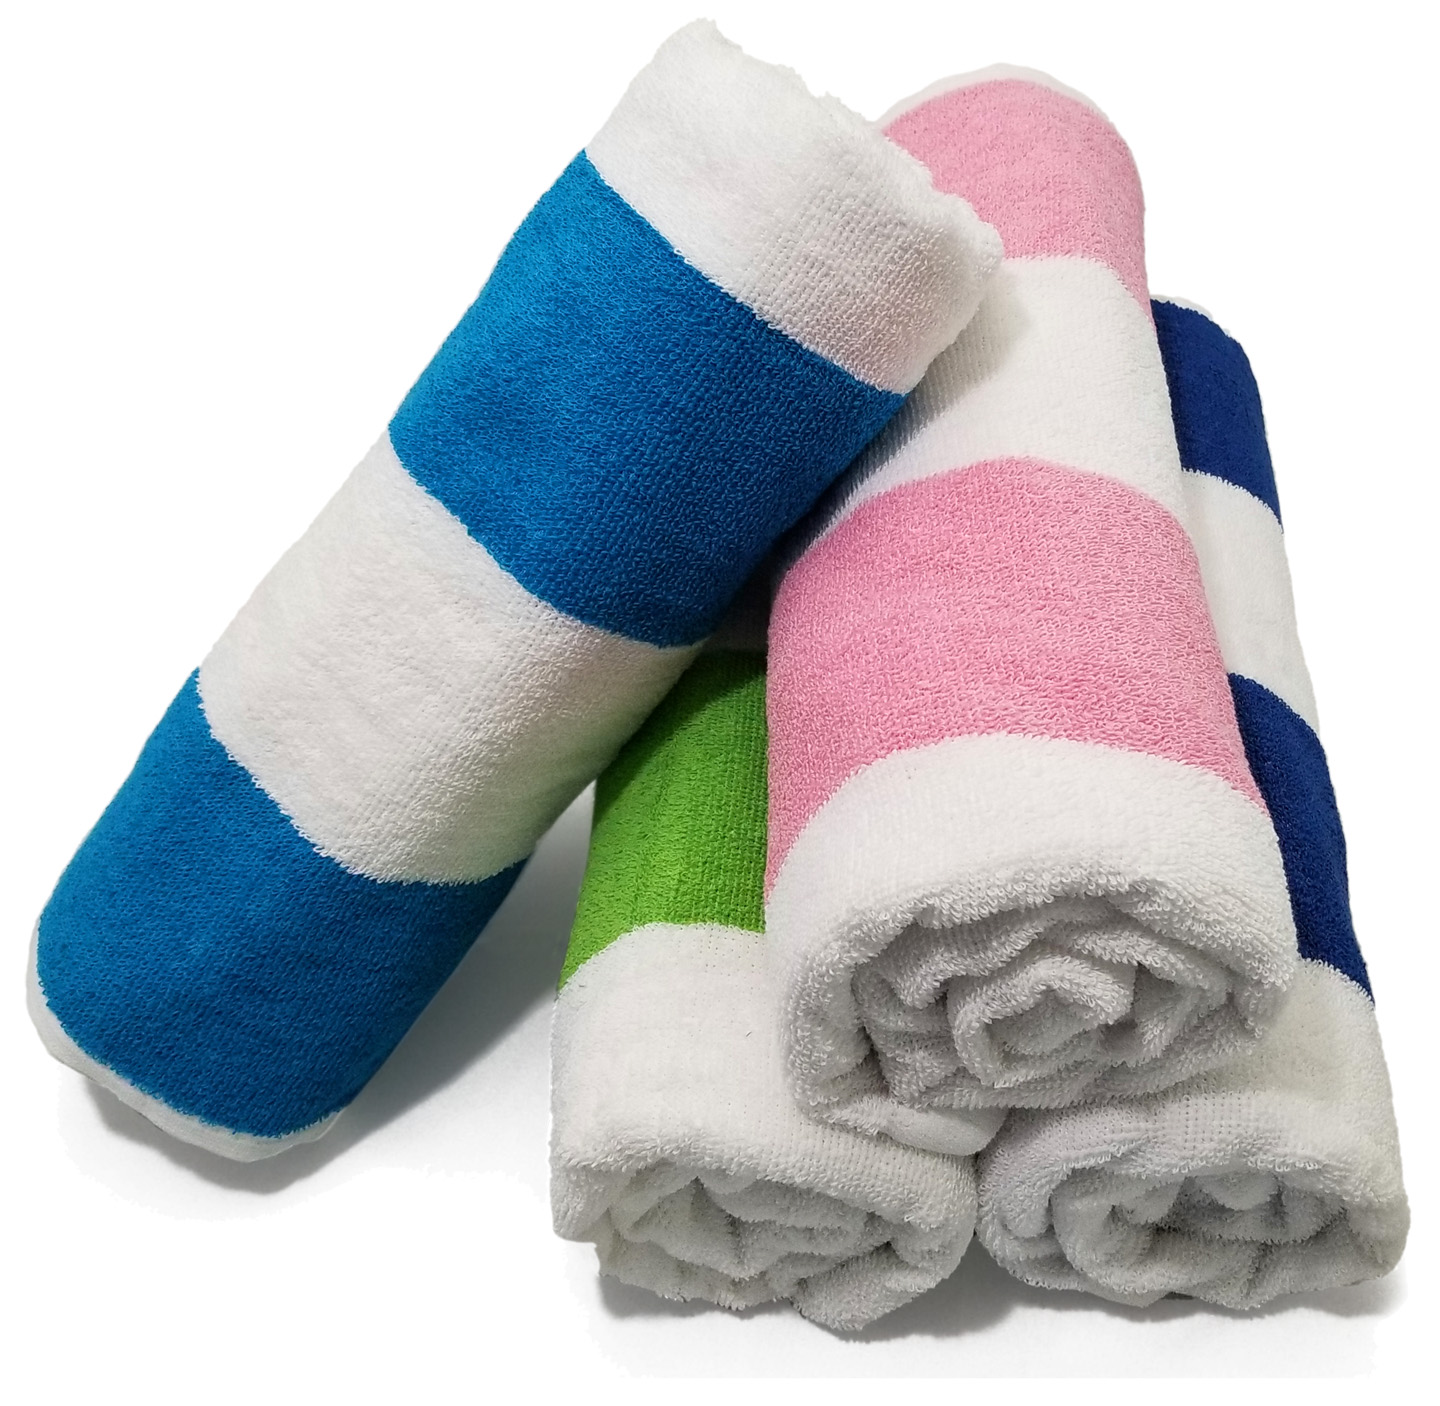 30x60 Lightweight Economy Cabana Beach Towels. (Assorted Colors)